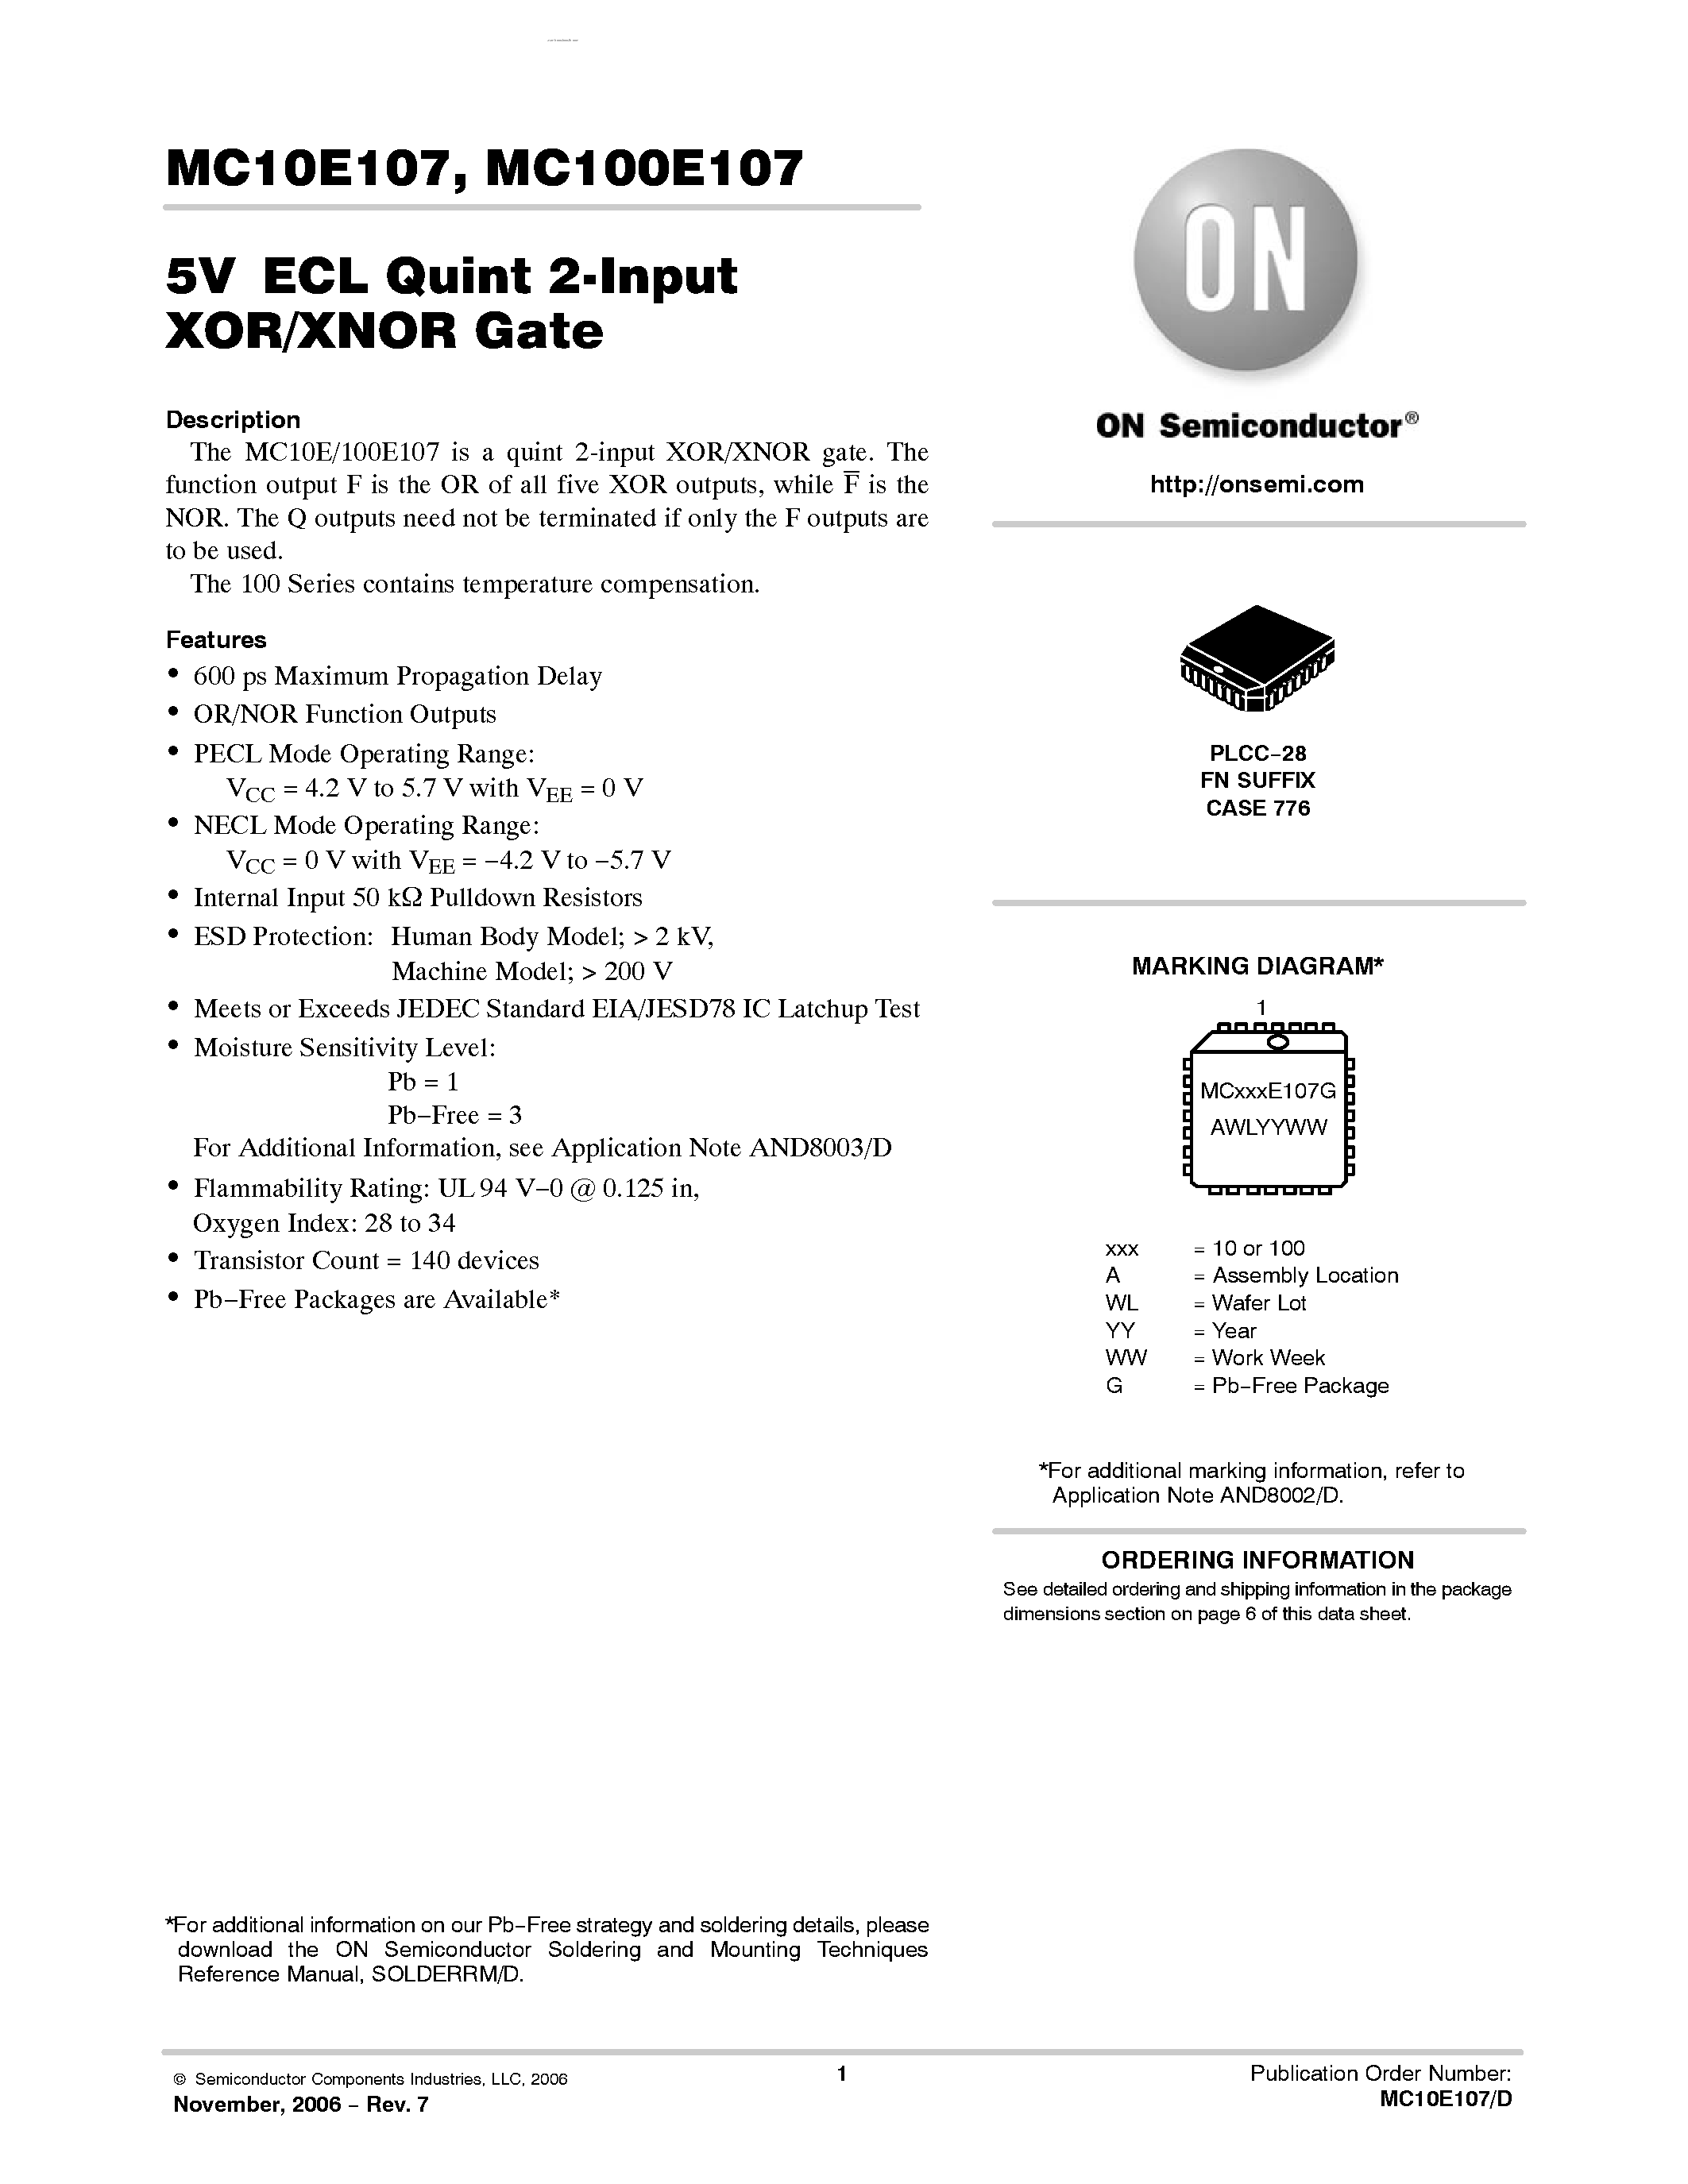 Datasheet MC100E107 - QUINT 2-INPUT XOR/XNOR GATE page 1